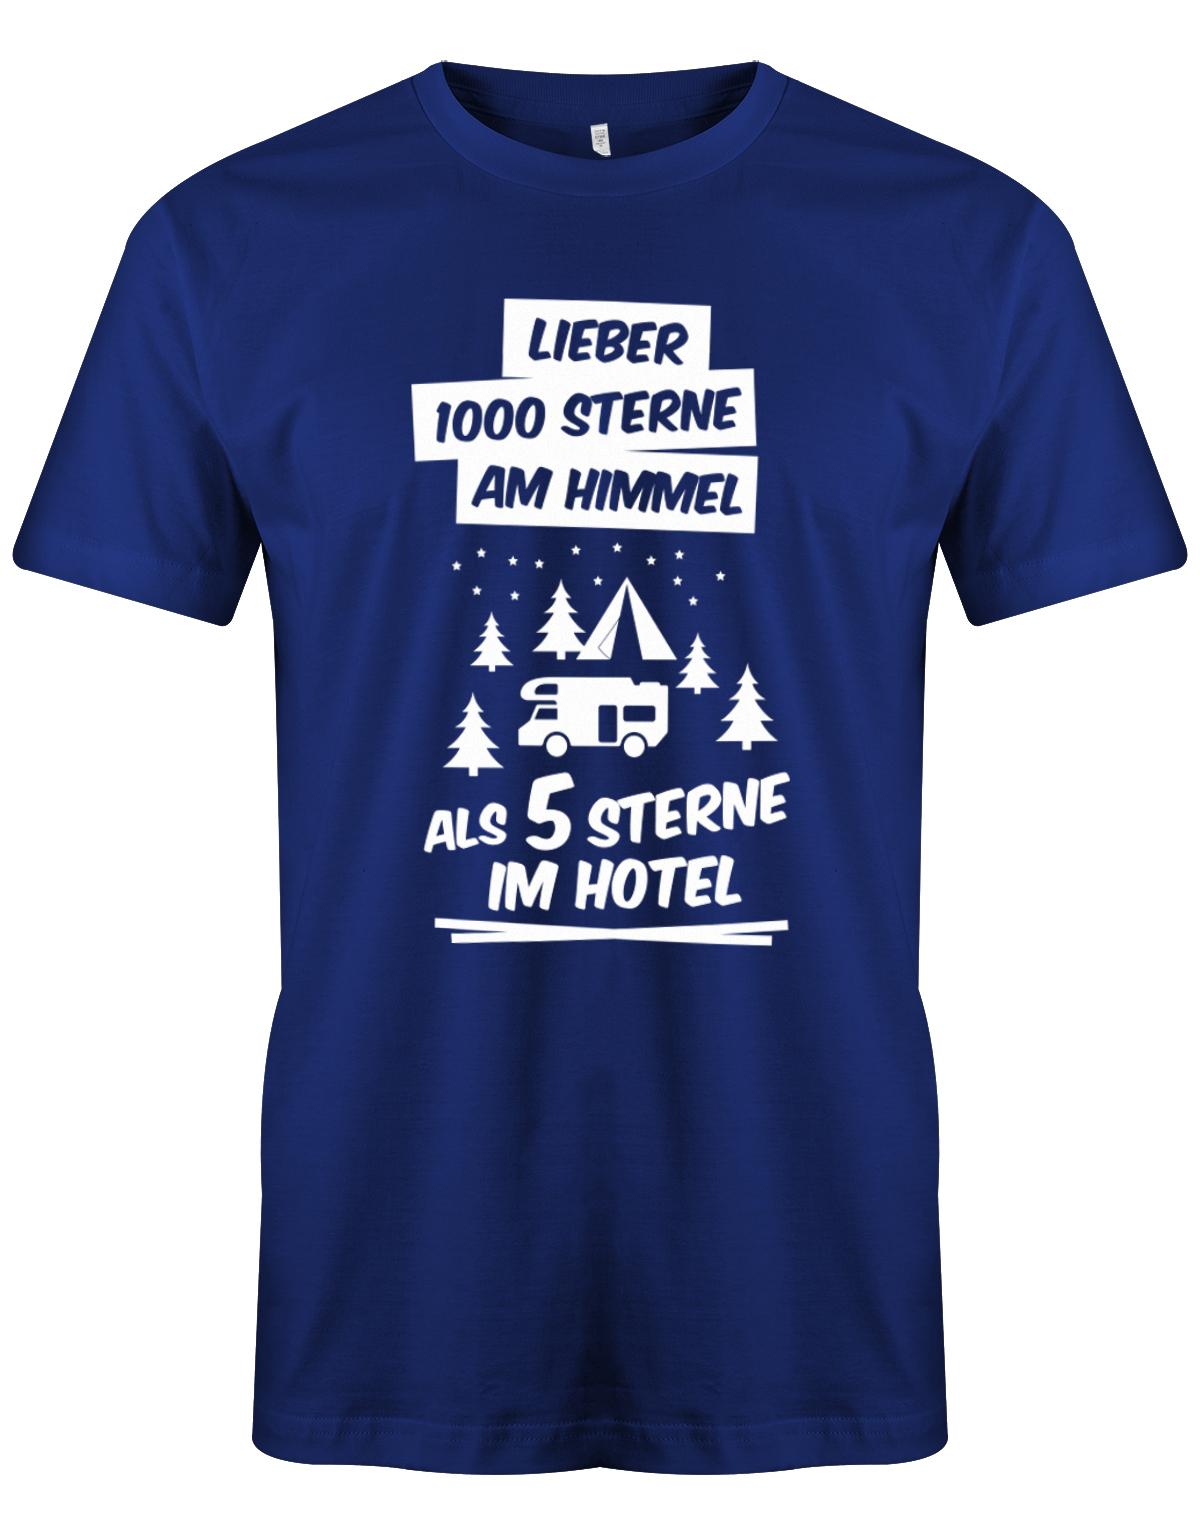 Lieber-1000-Sterne-am-Himmel-als-5-Sterne-im-hotel-Camping-Shirt-Herren-royalblau